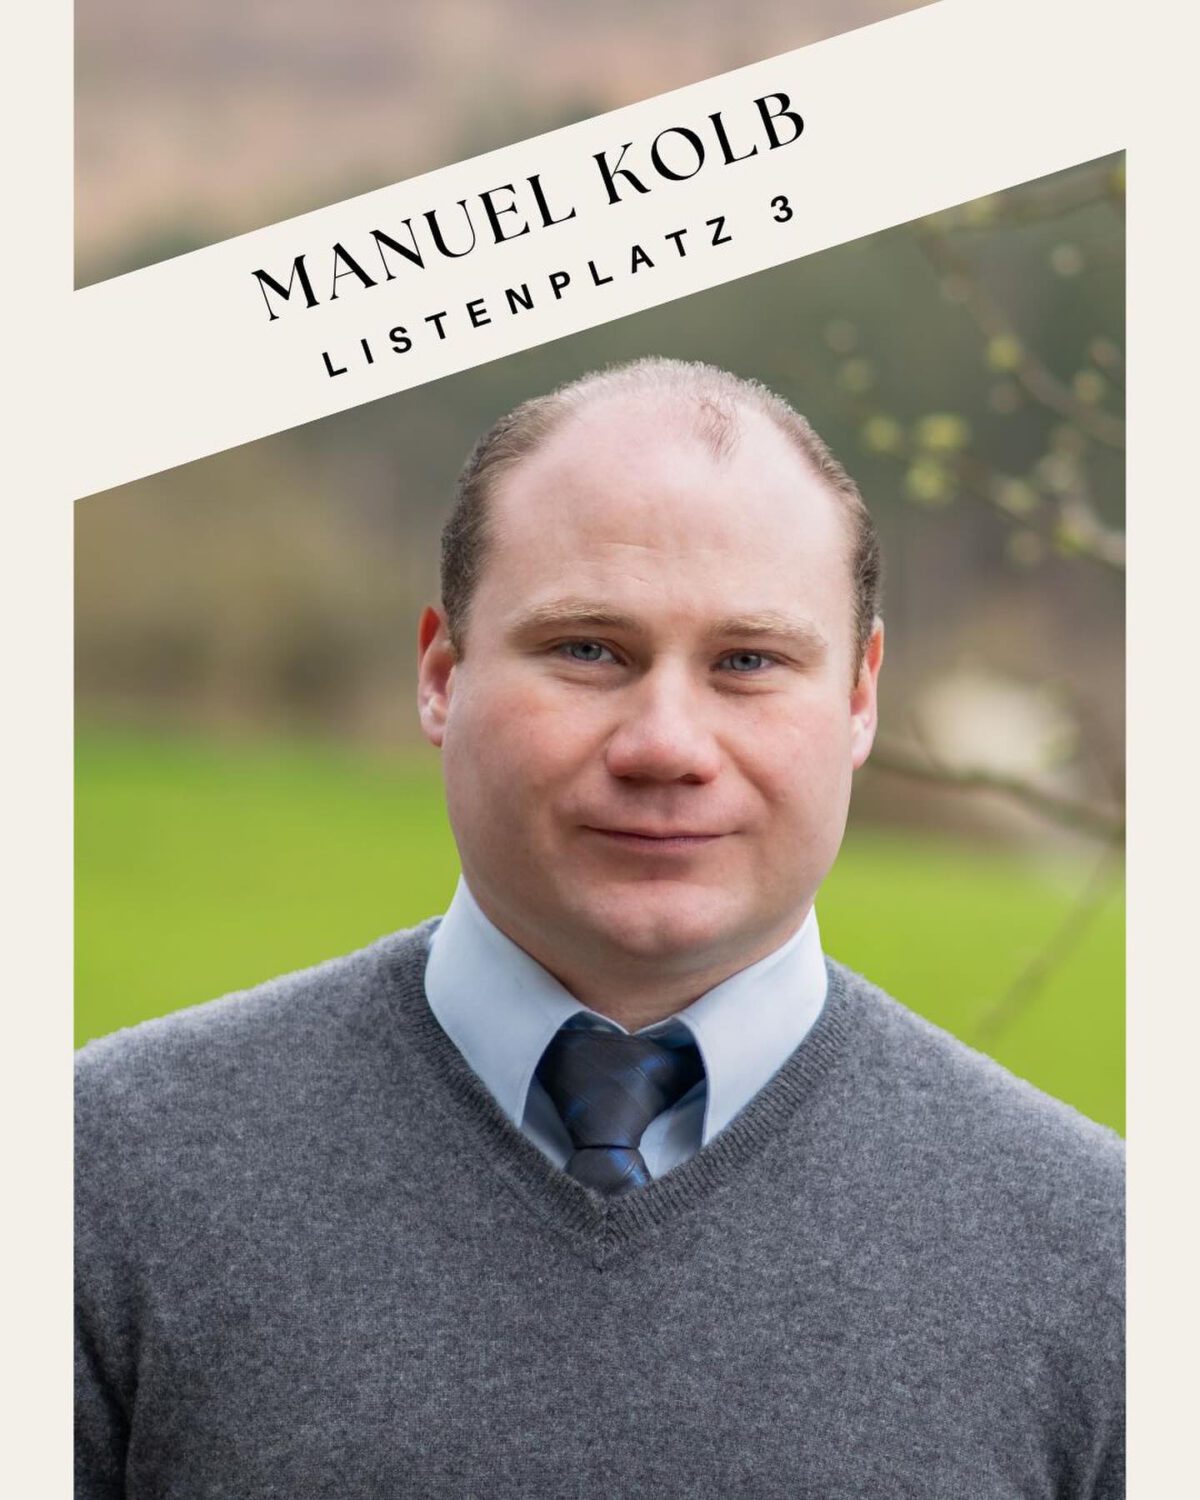 Kandidat Manuel Kolb